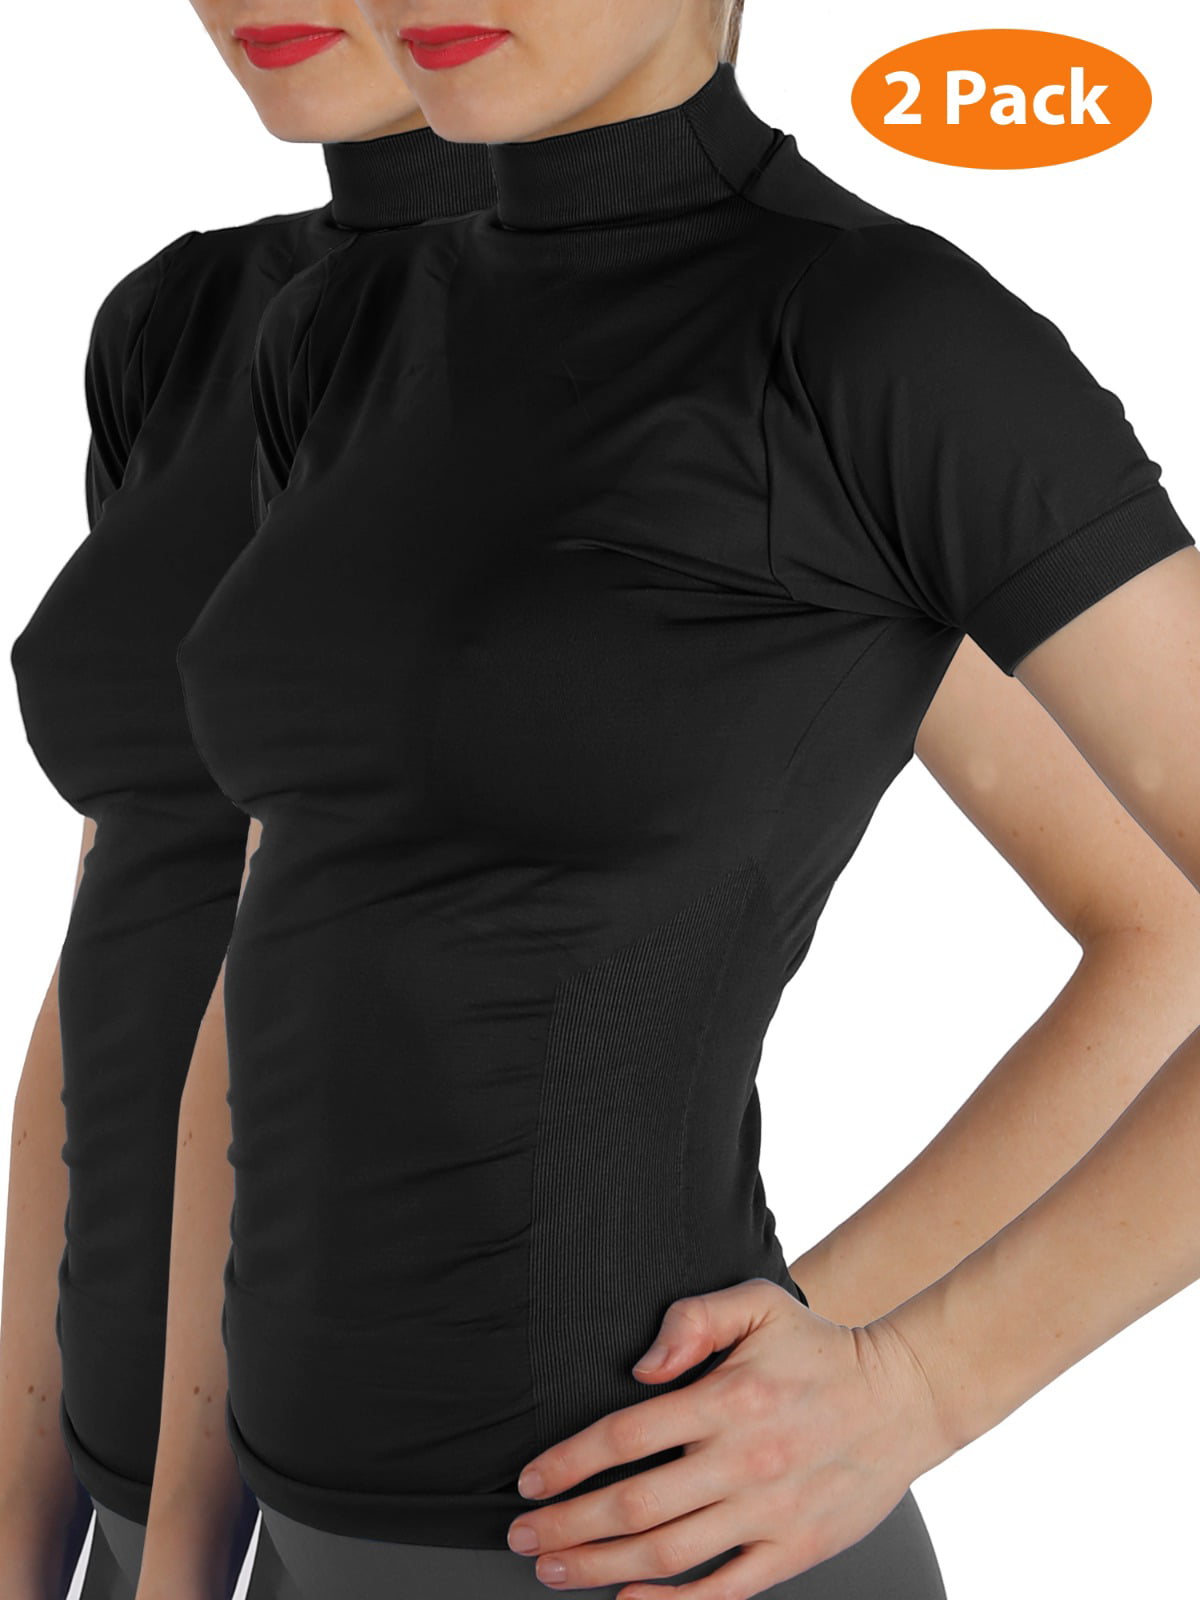 Download AllyCat - 2 Pack Women Short Sleeves Mock Neck Turtleneck ...